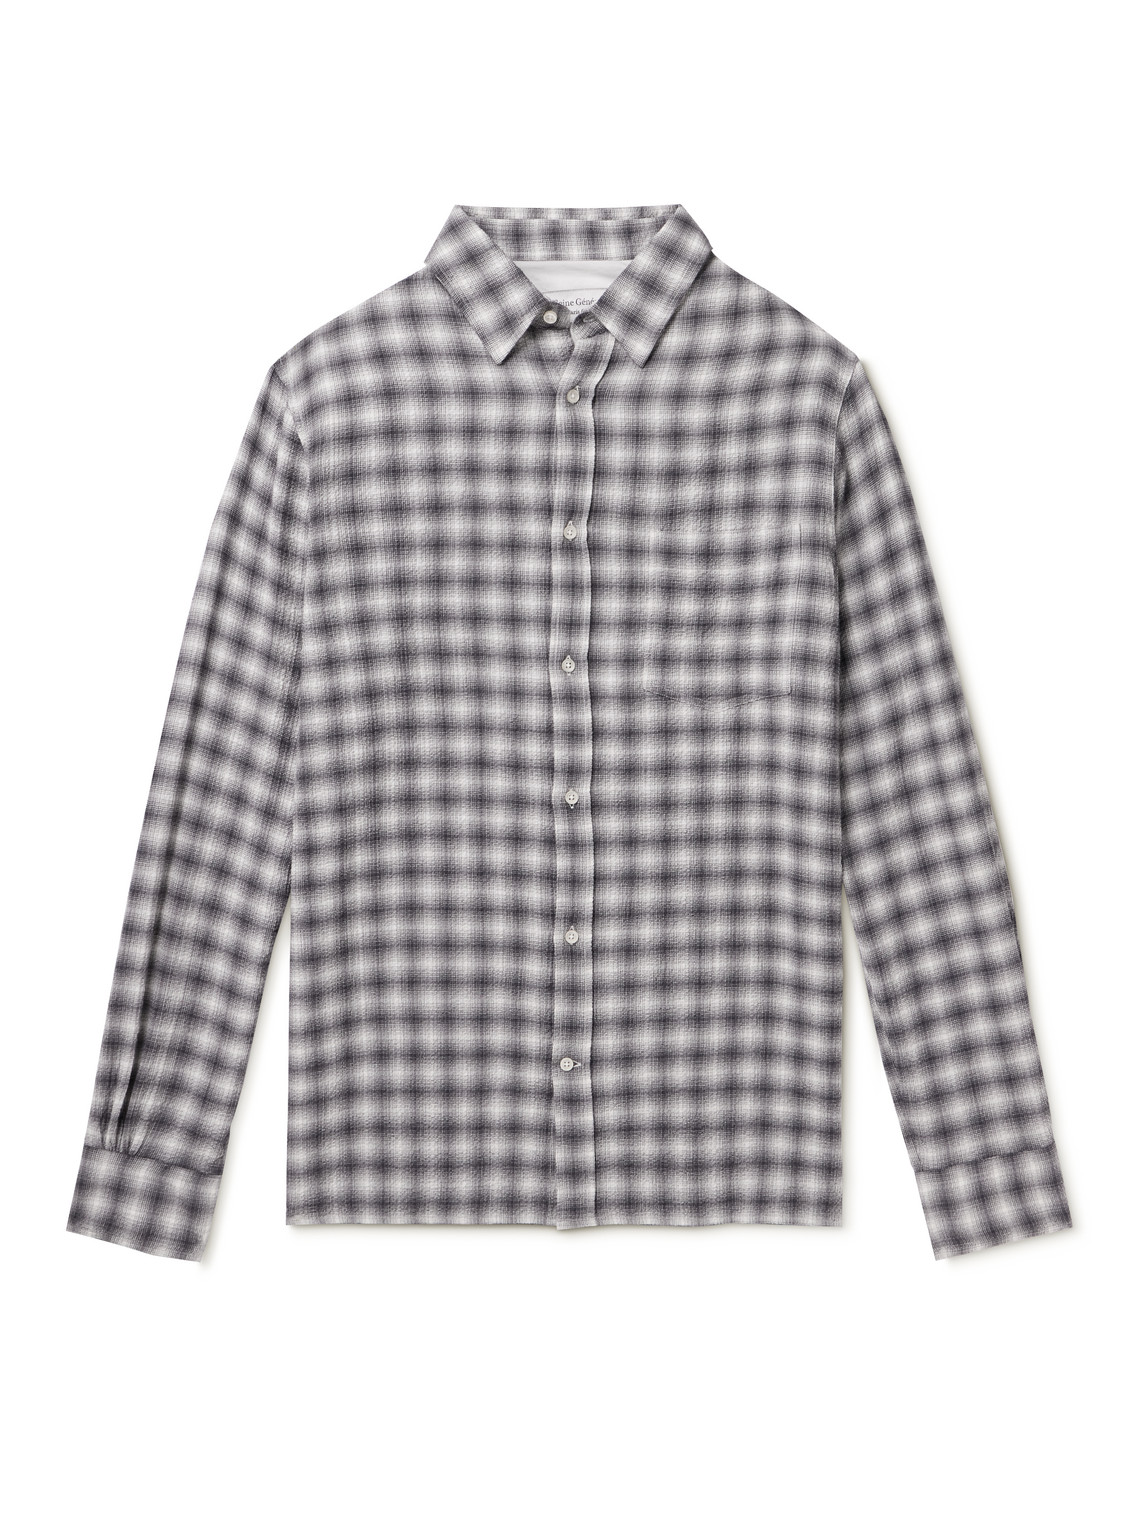 Officine Générale - Alex Checked Cotton-Blend Seersucker Shirt - Men - Gray - M von Officine Générale